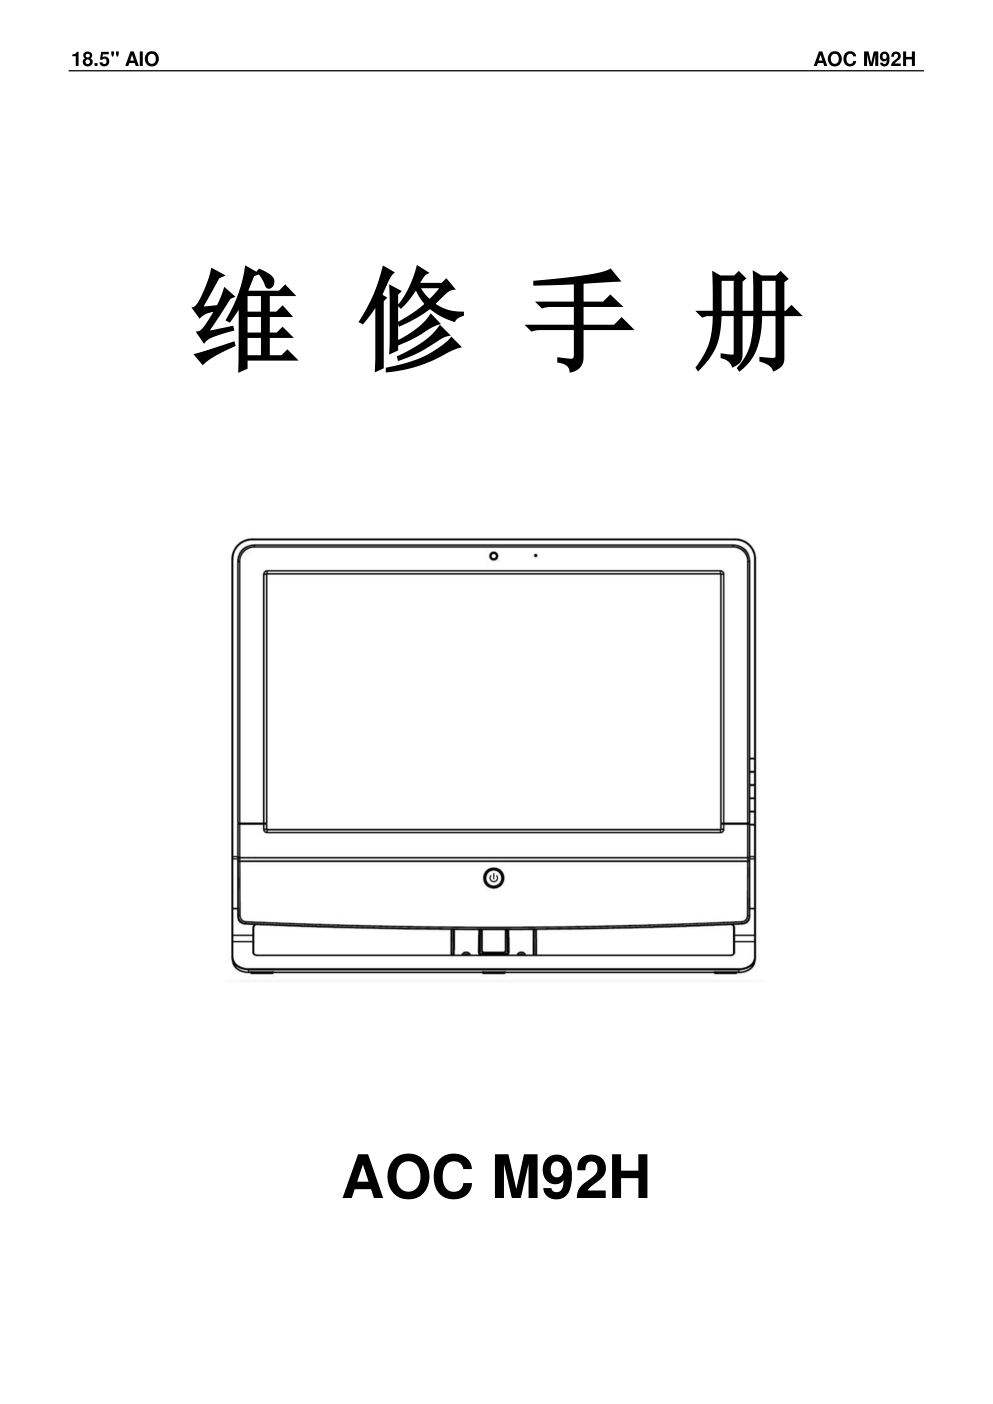 AOC M92H液晶显示器维修手册和图纸-0